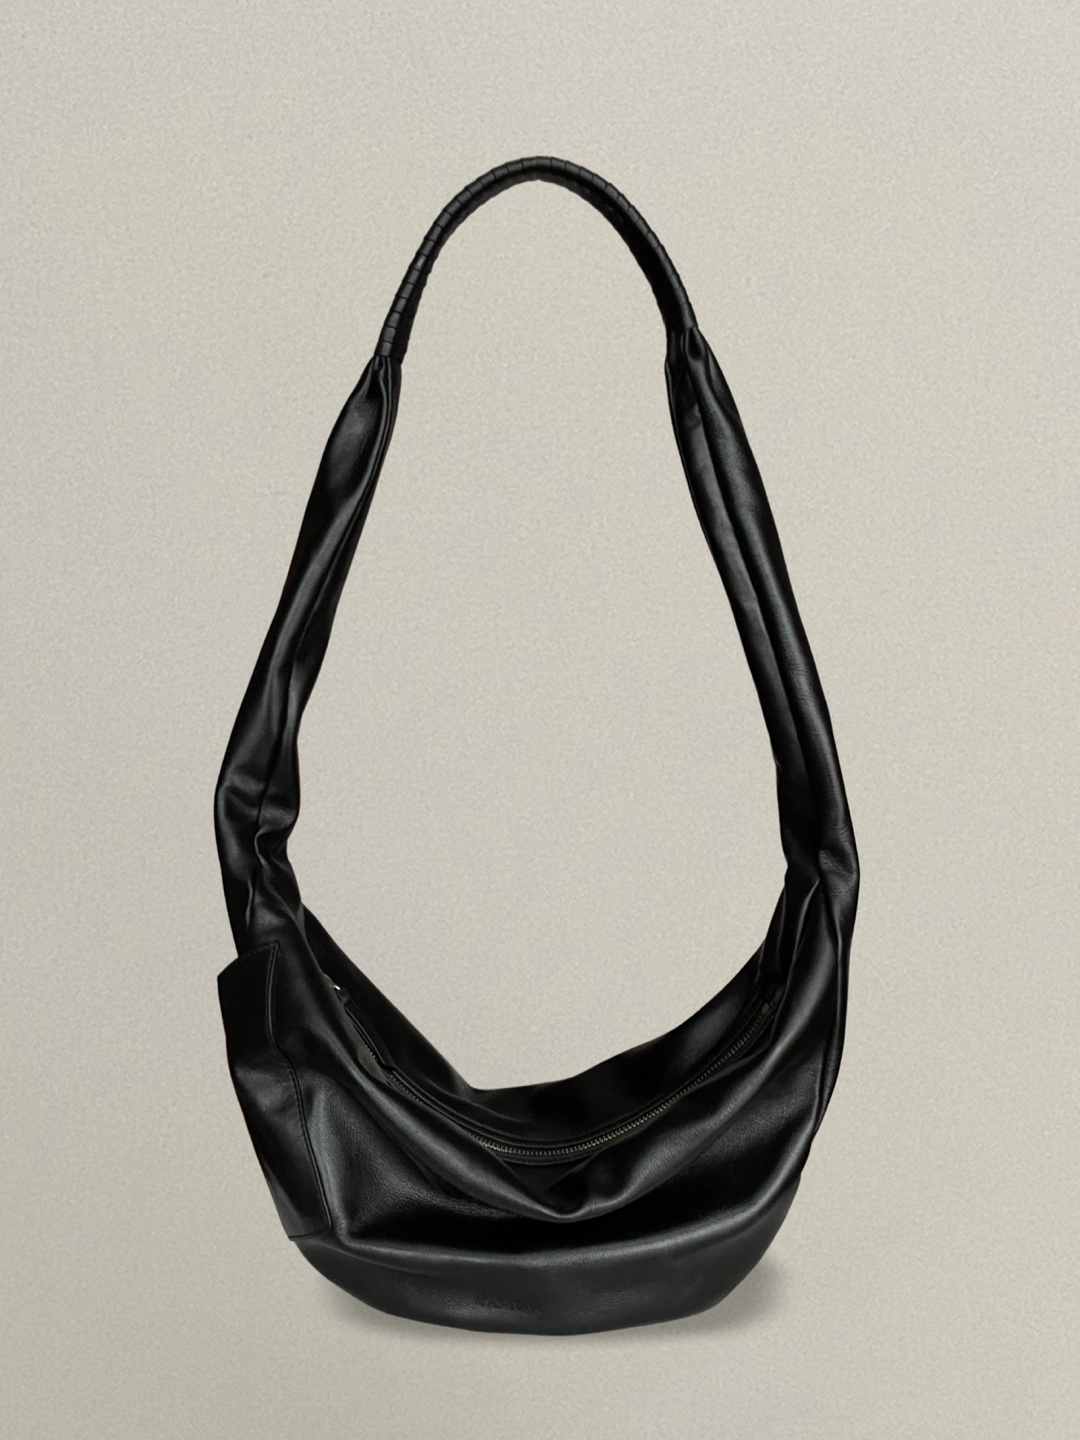 Manoux bag_small black